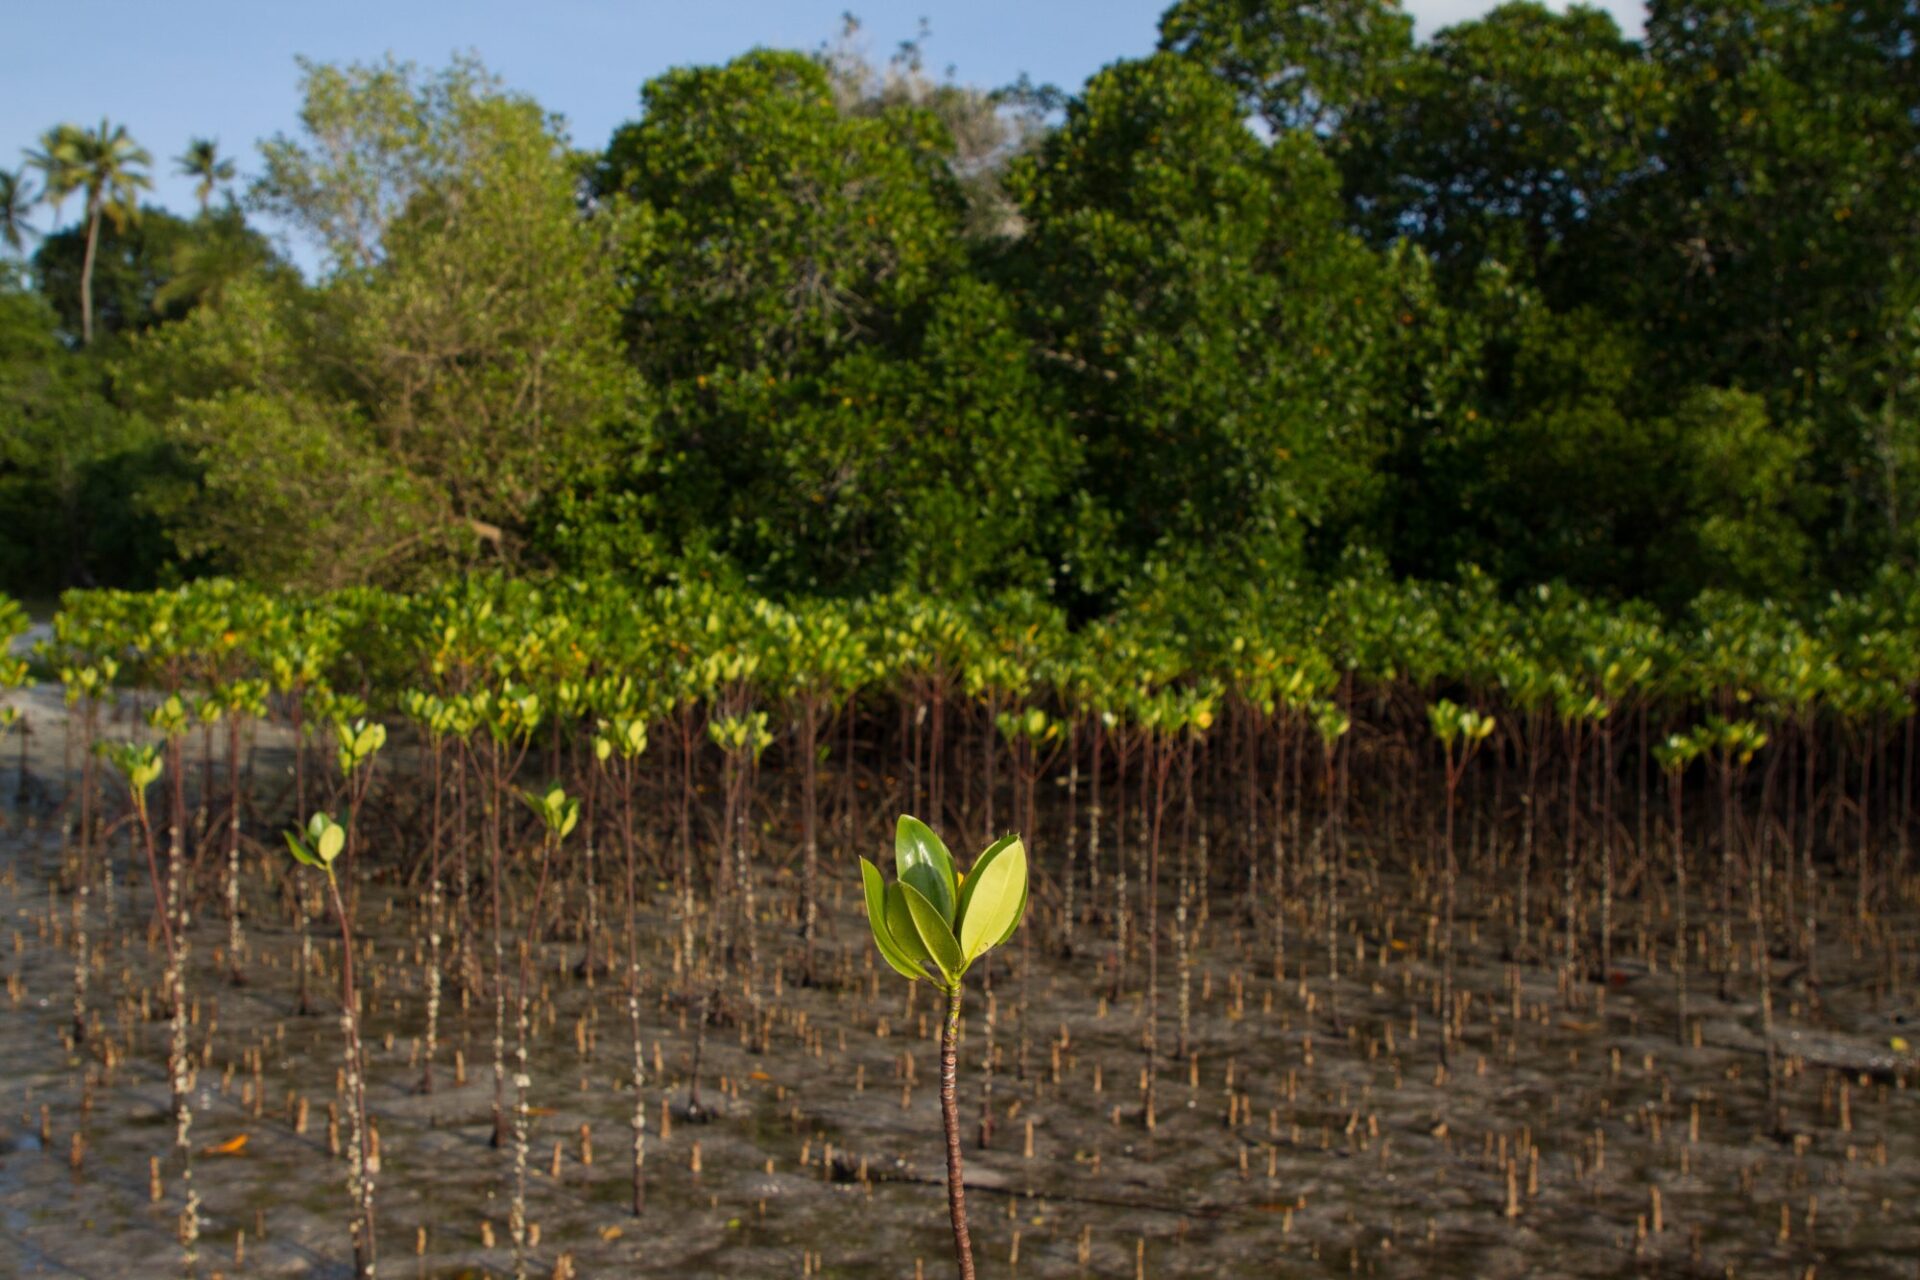 A mangrove seedling up close.